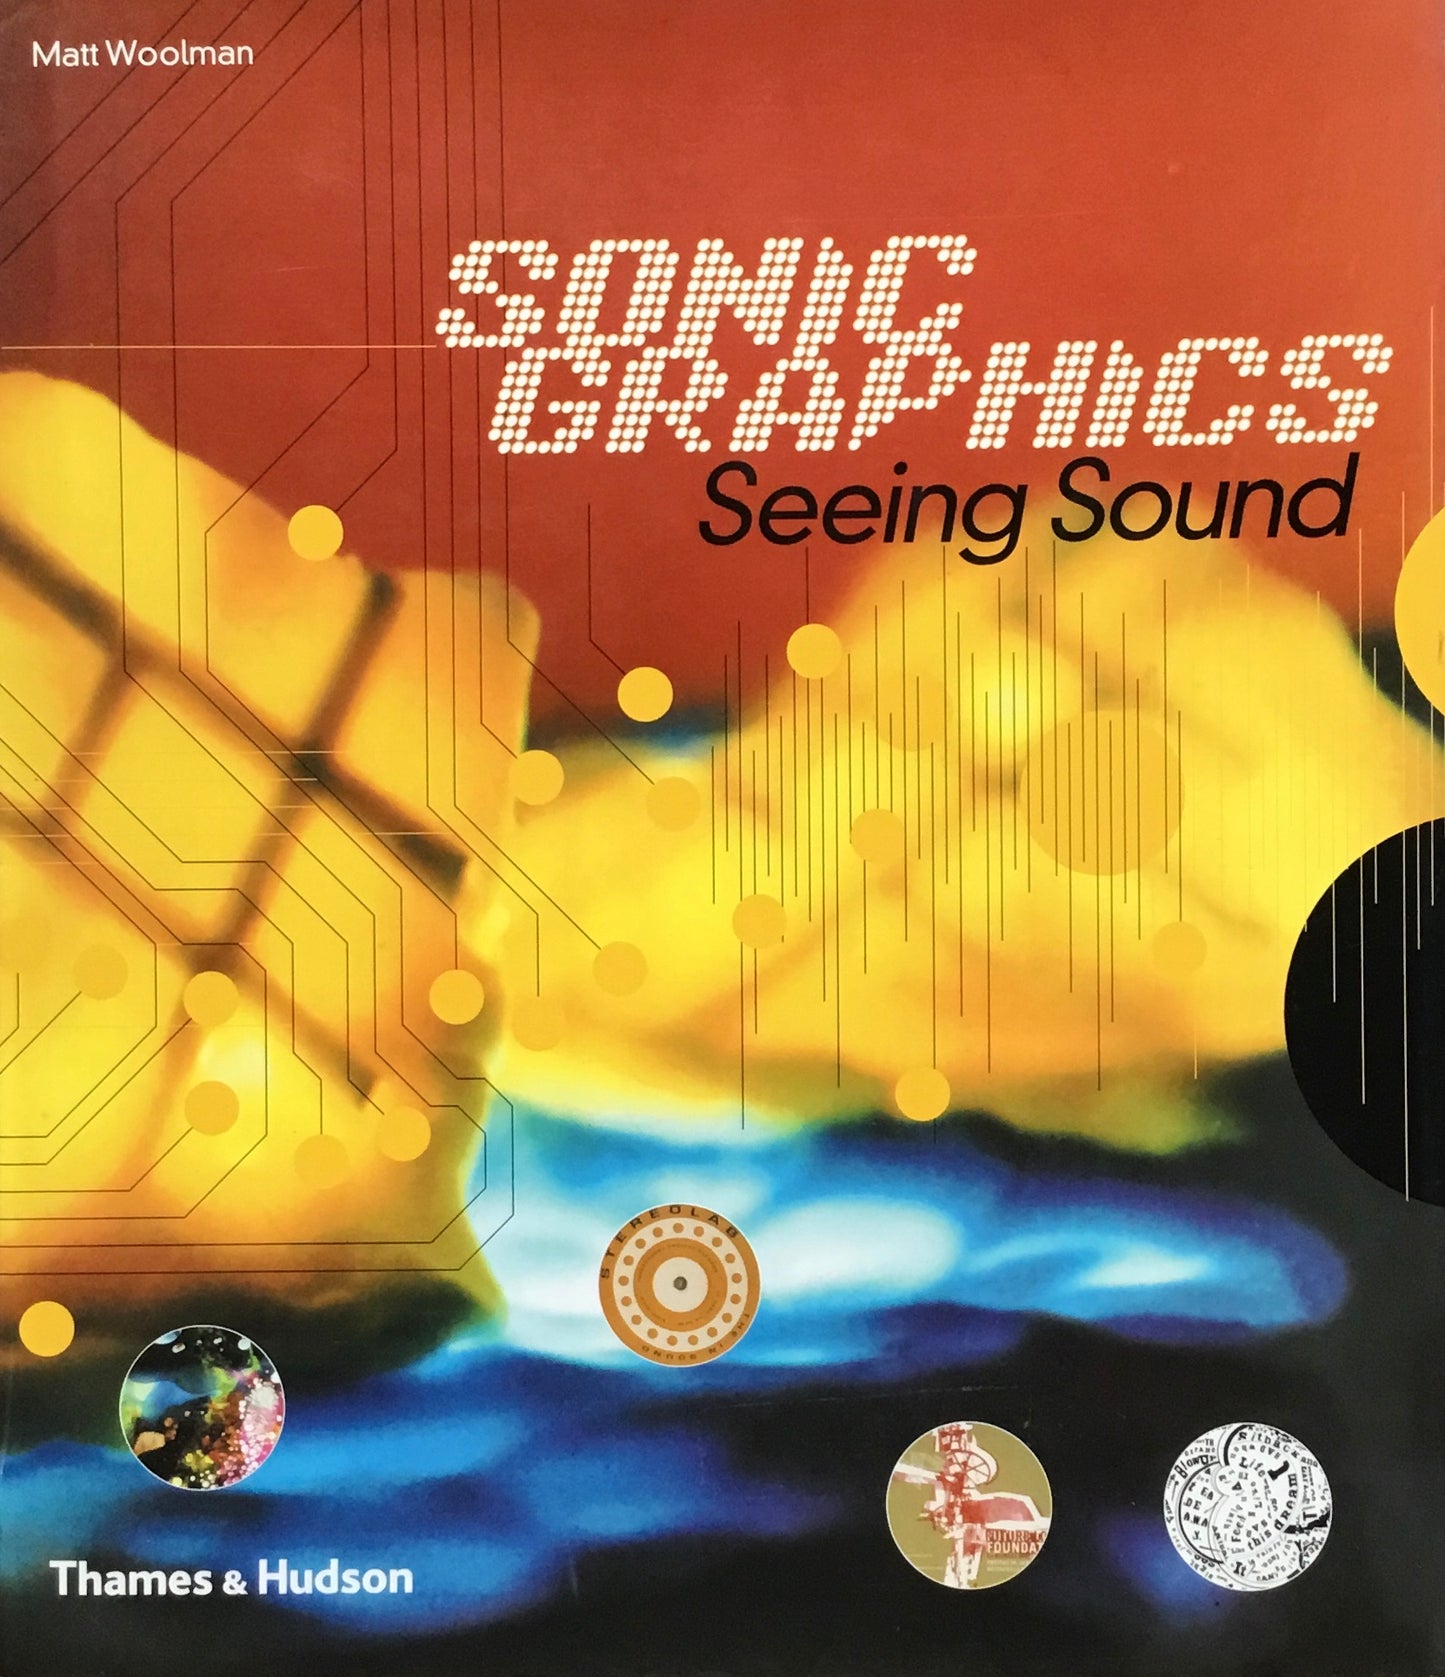 Sonic Graphics　Seeing Sound　Matt Woolman